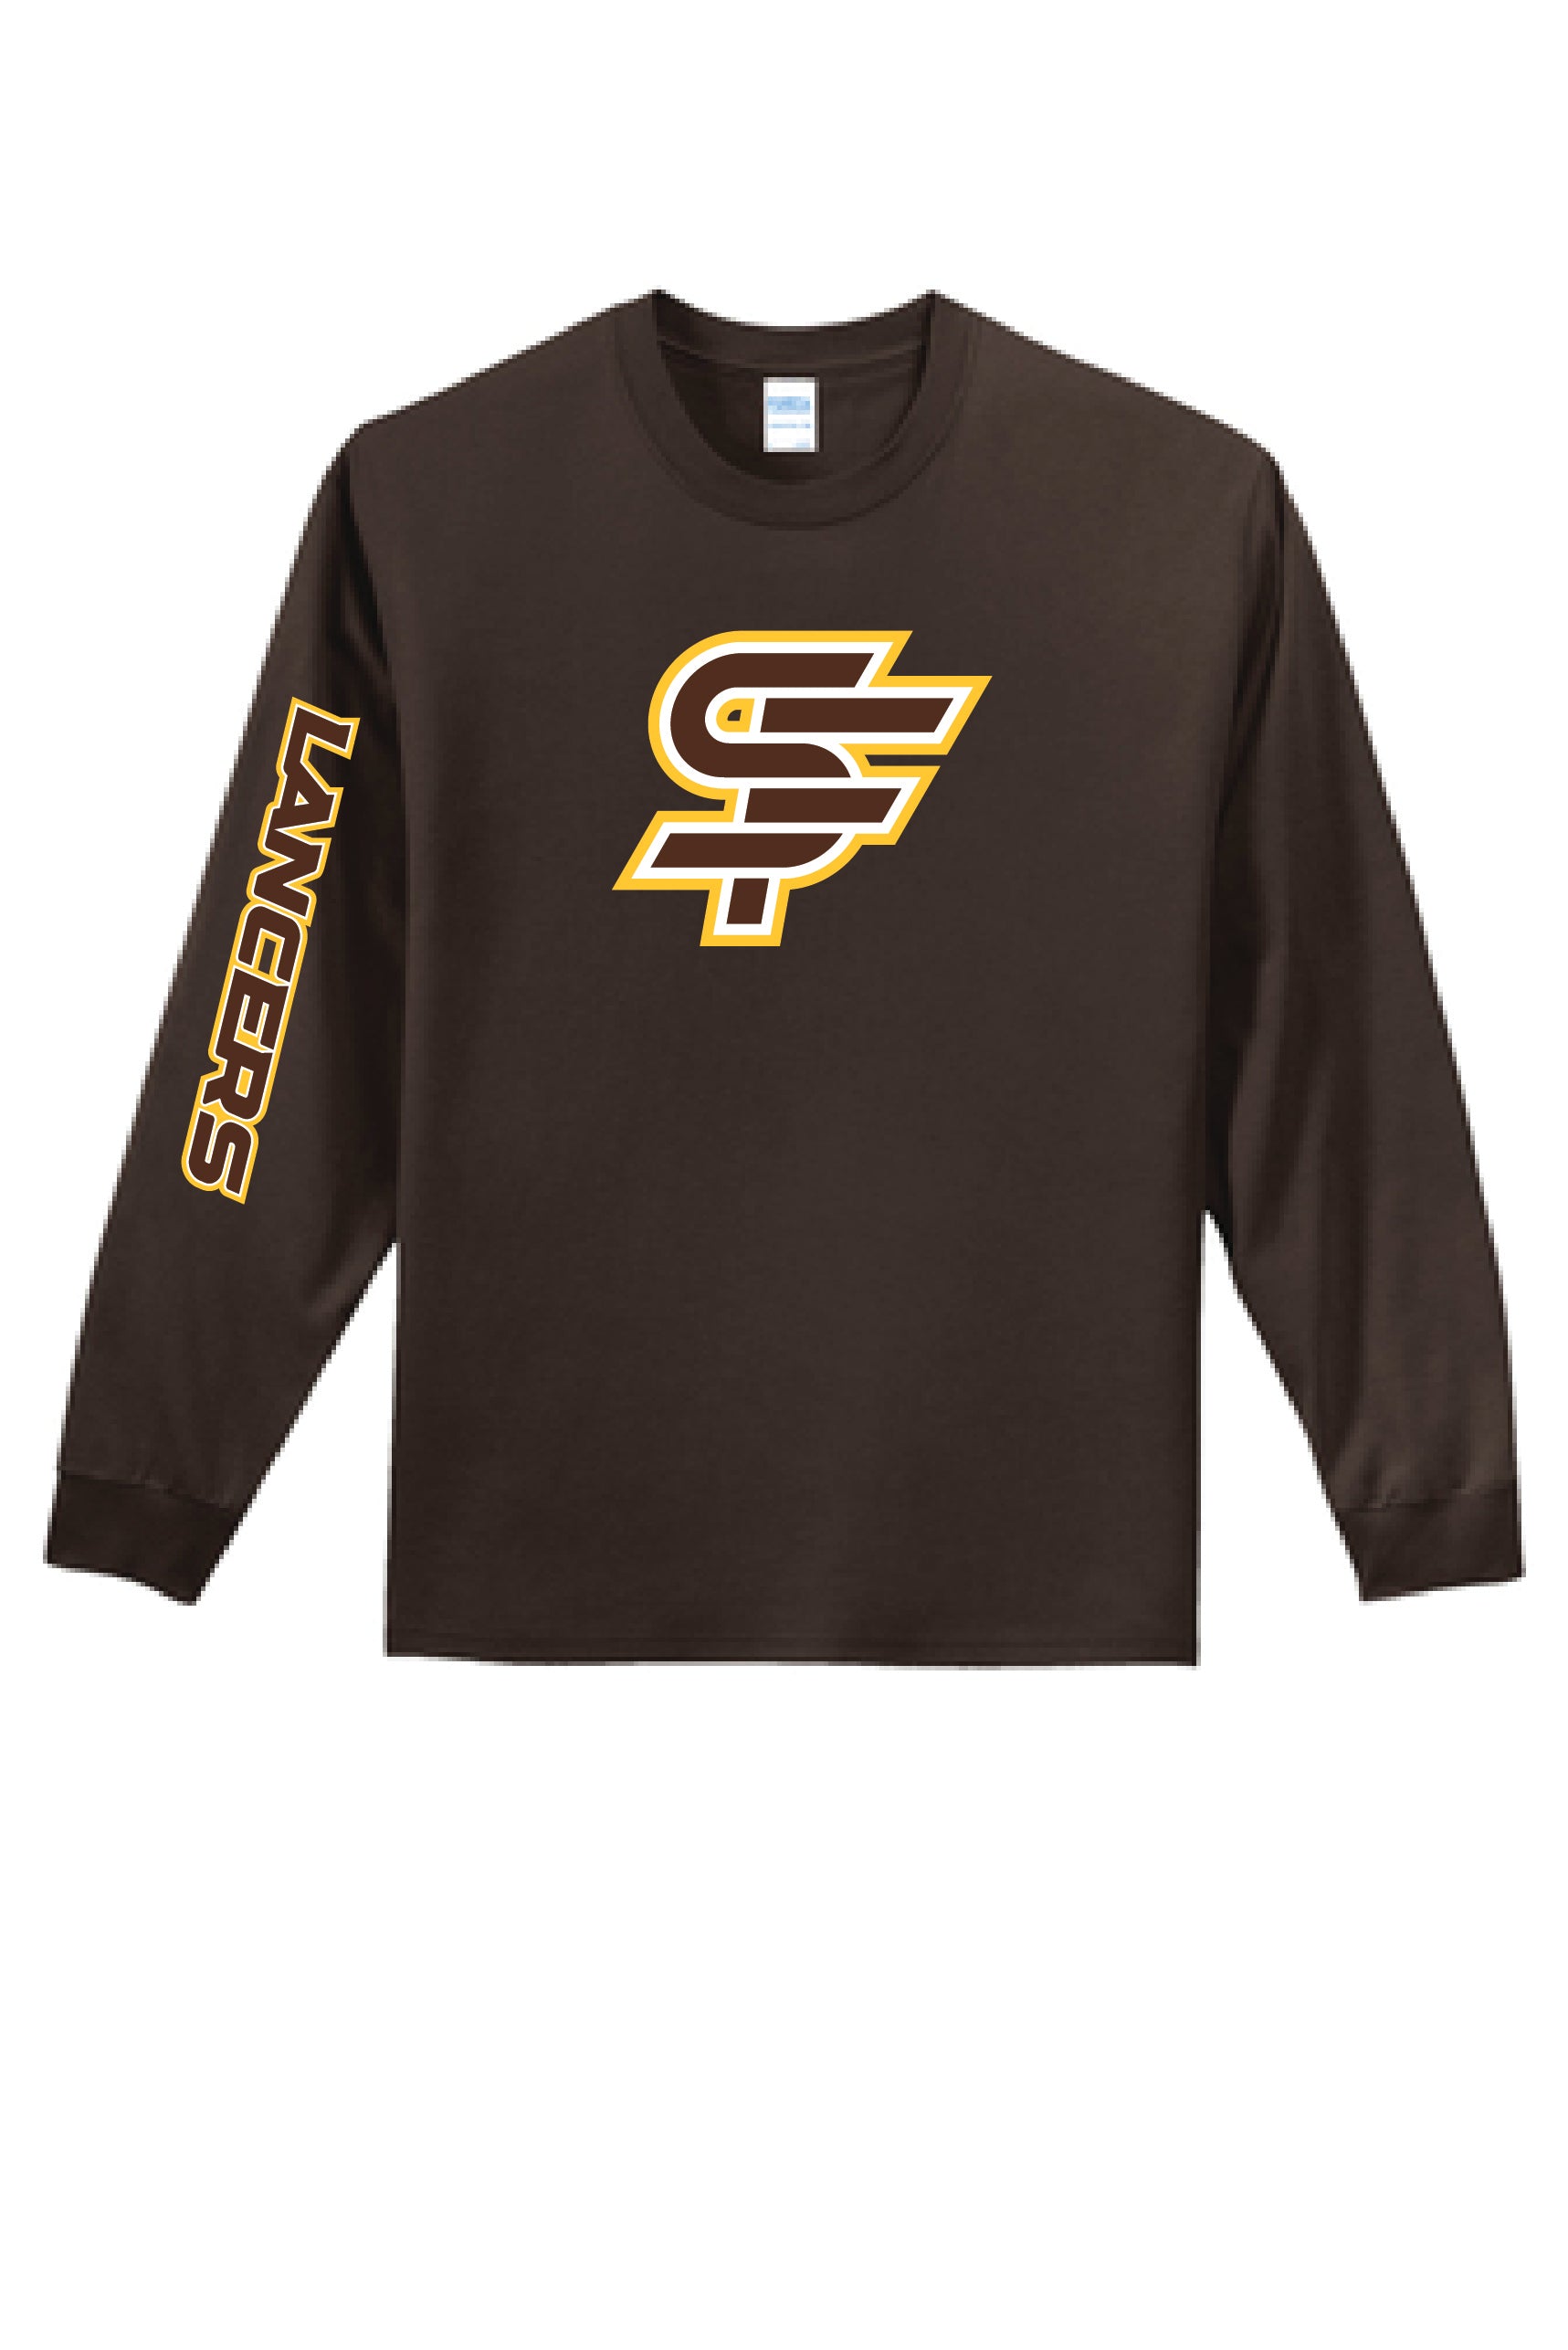 T-Shirt/ LONG Sleeve, Gold/ Brown/White Logo, New Saint Francis Design